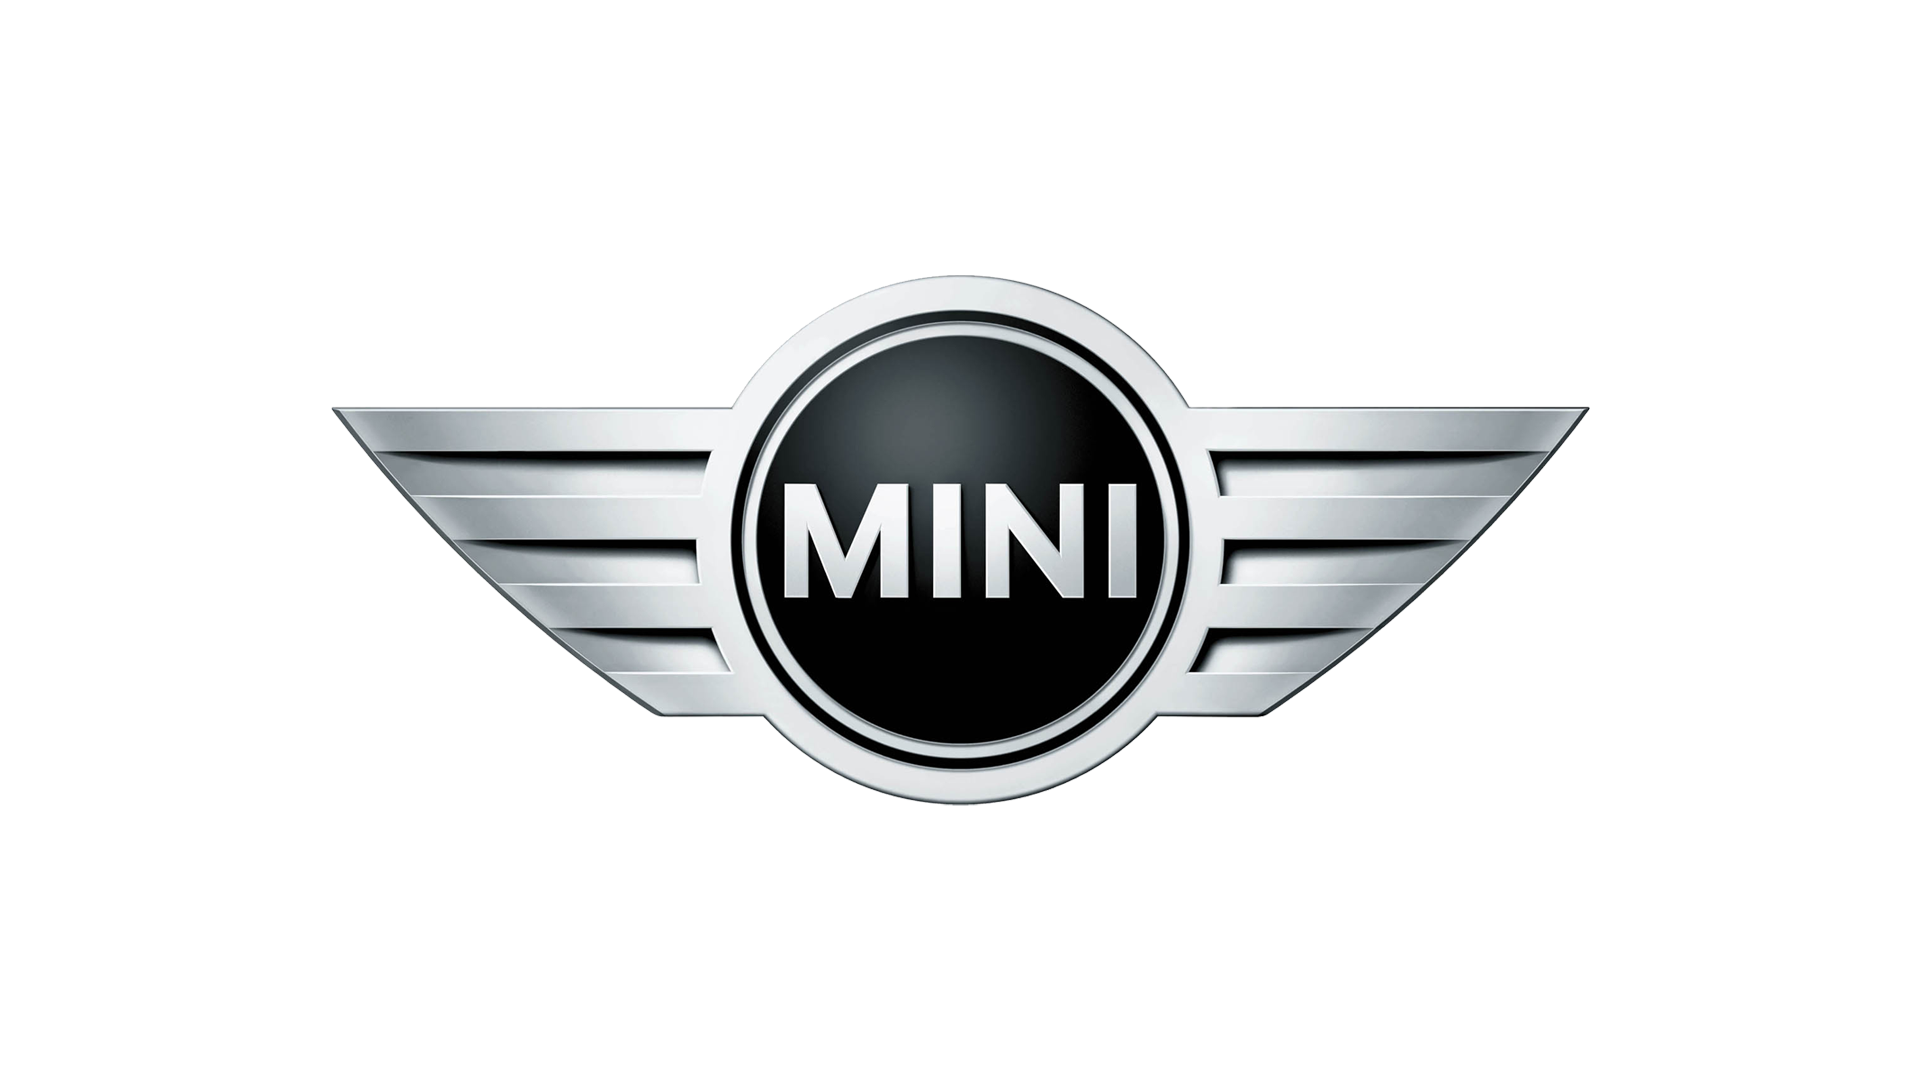 Mini-logo-2001-1920x1080.png